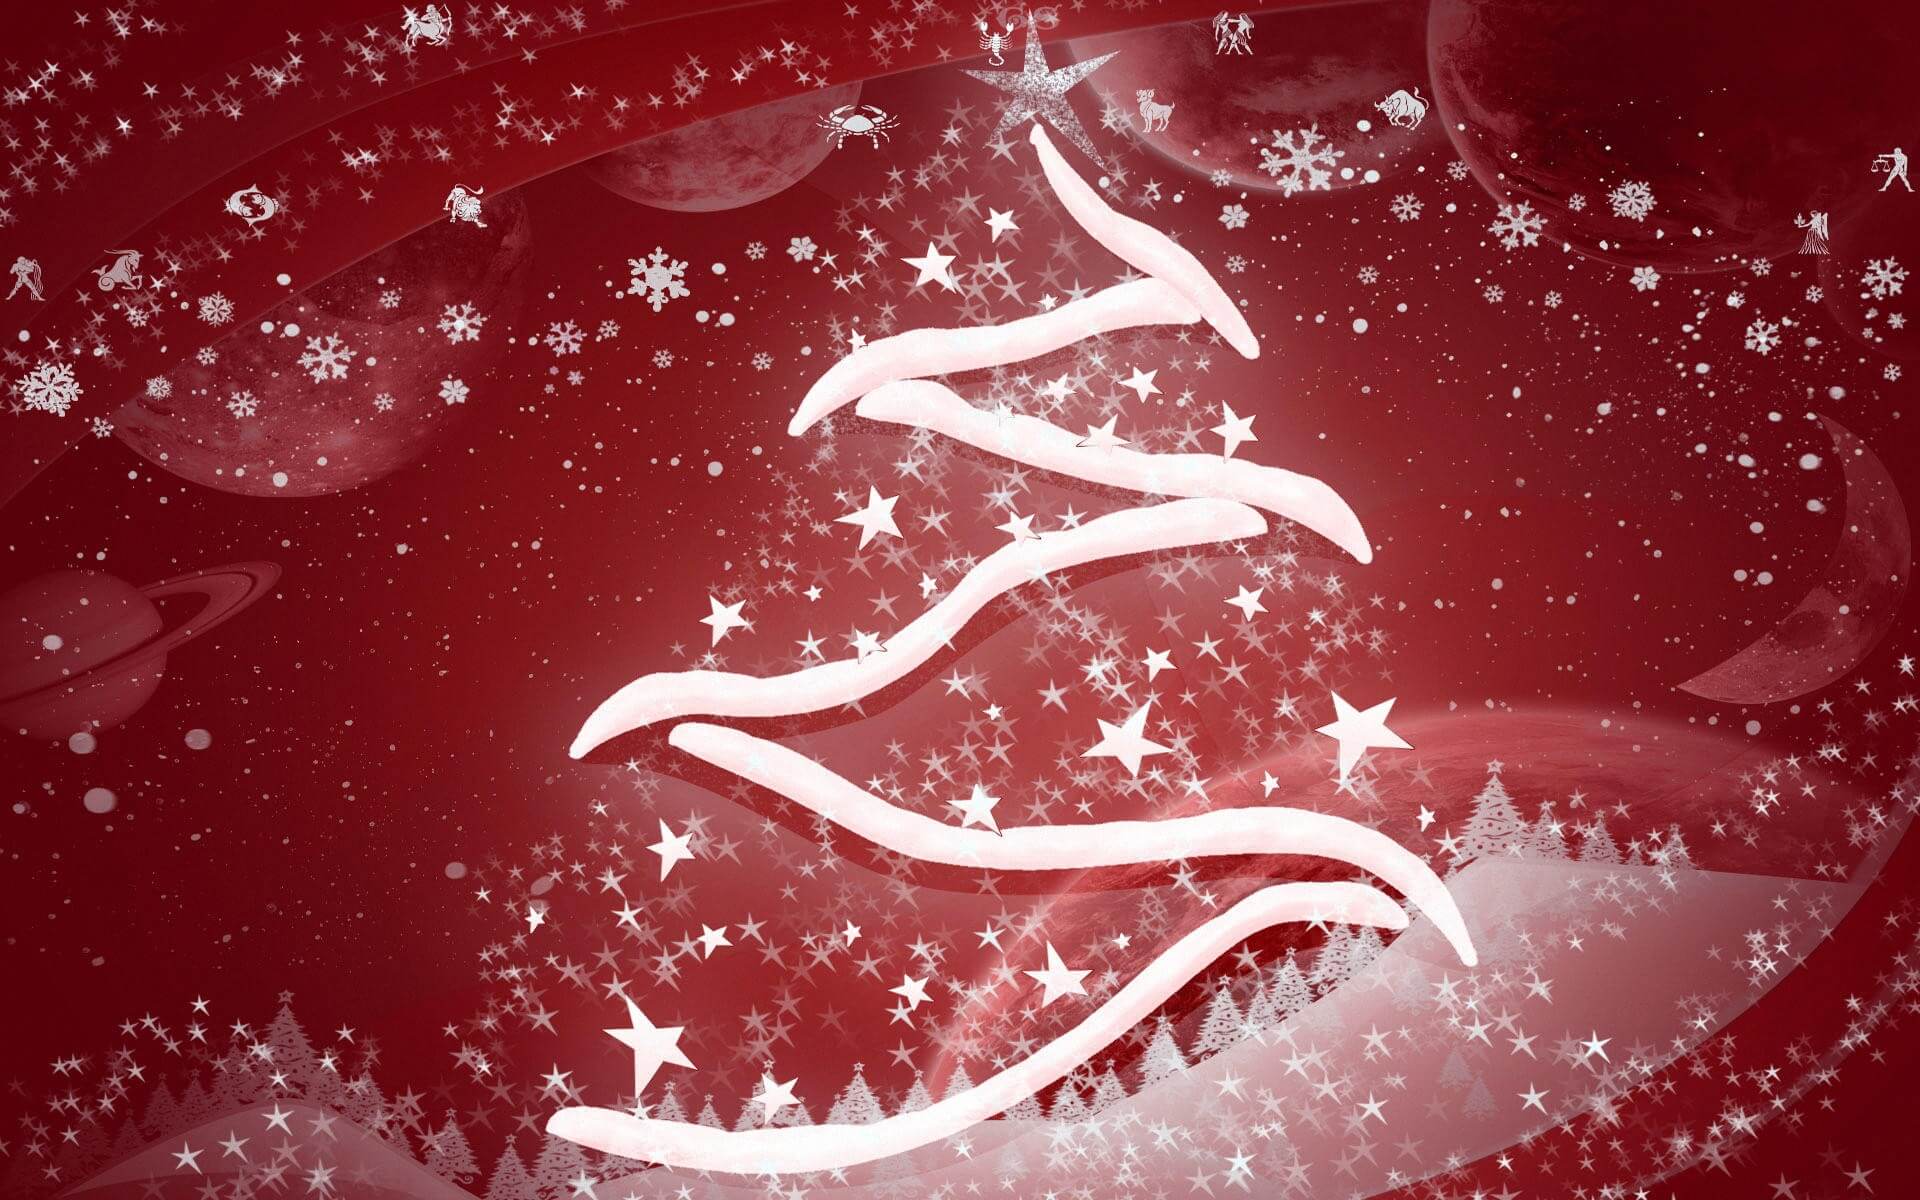 Abstract Christmas Card with Christmas Tree. Free iWork